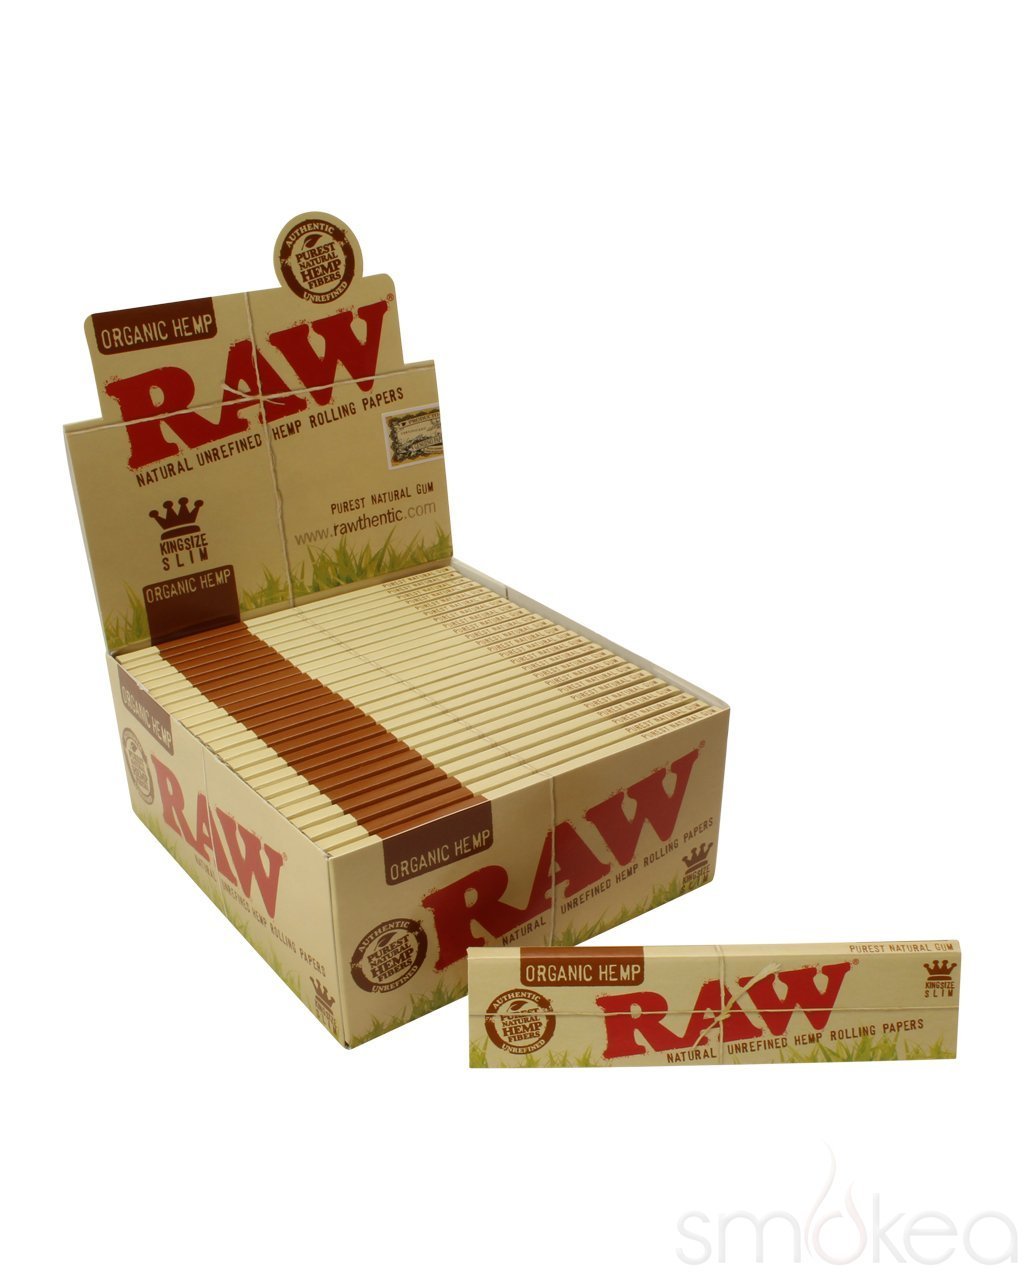 Raw Organic Hemp Kingsize Slim Rolling Papers (Full Box) - Bittchaser Smoke Shop